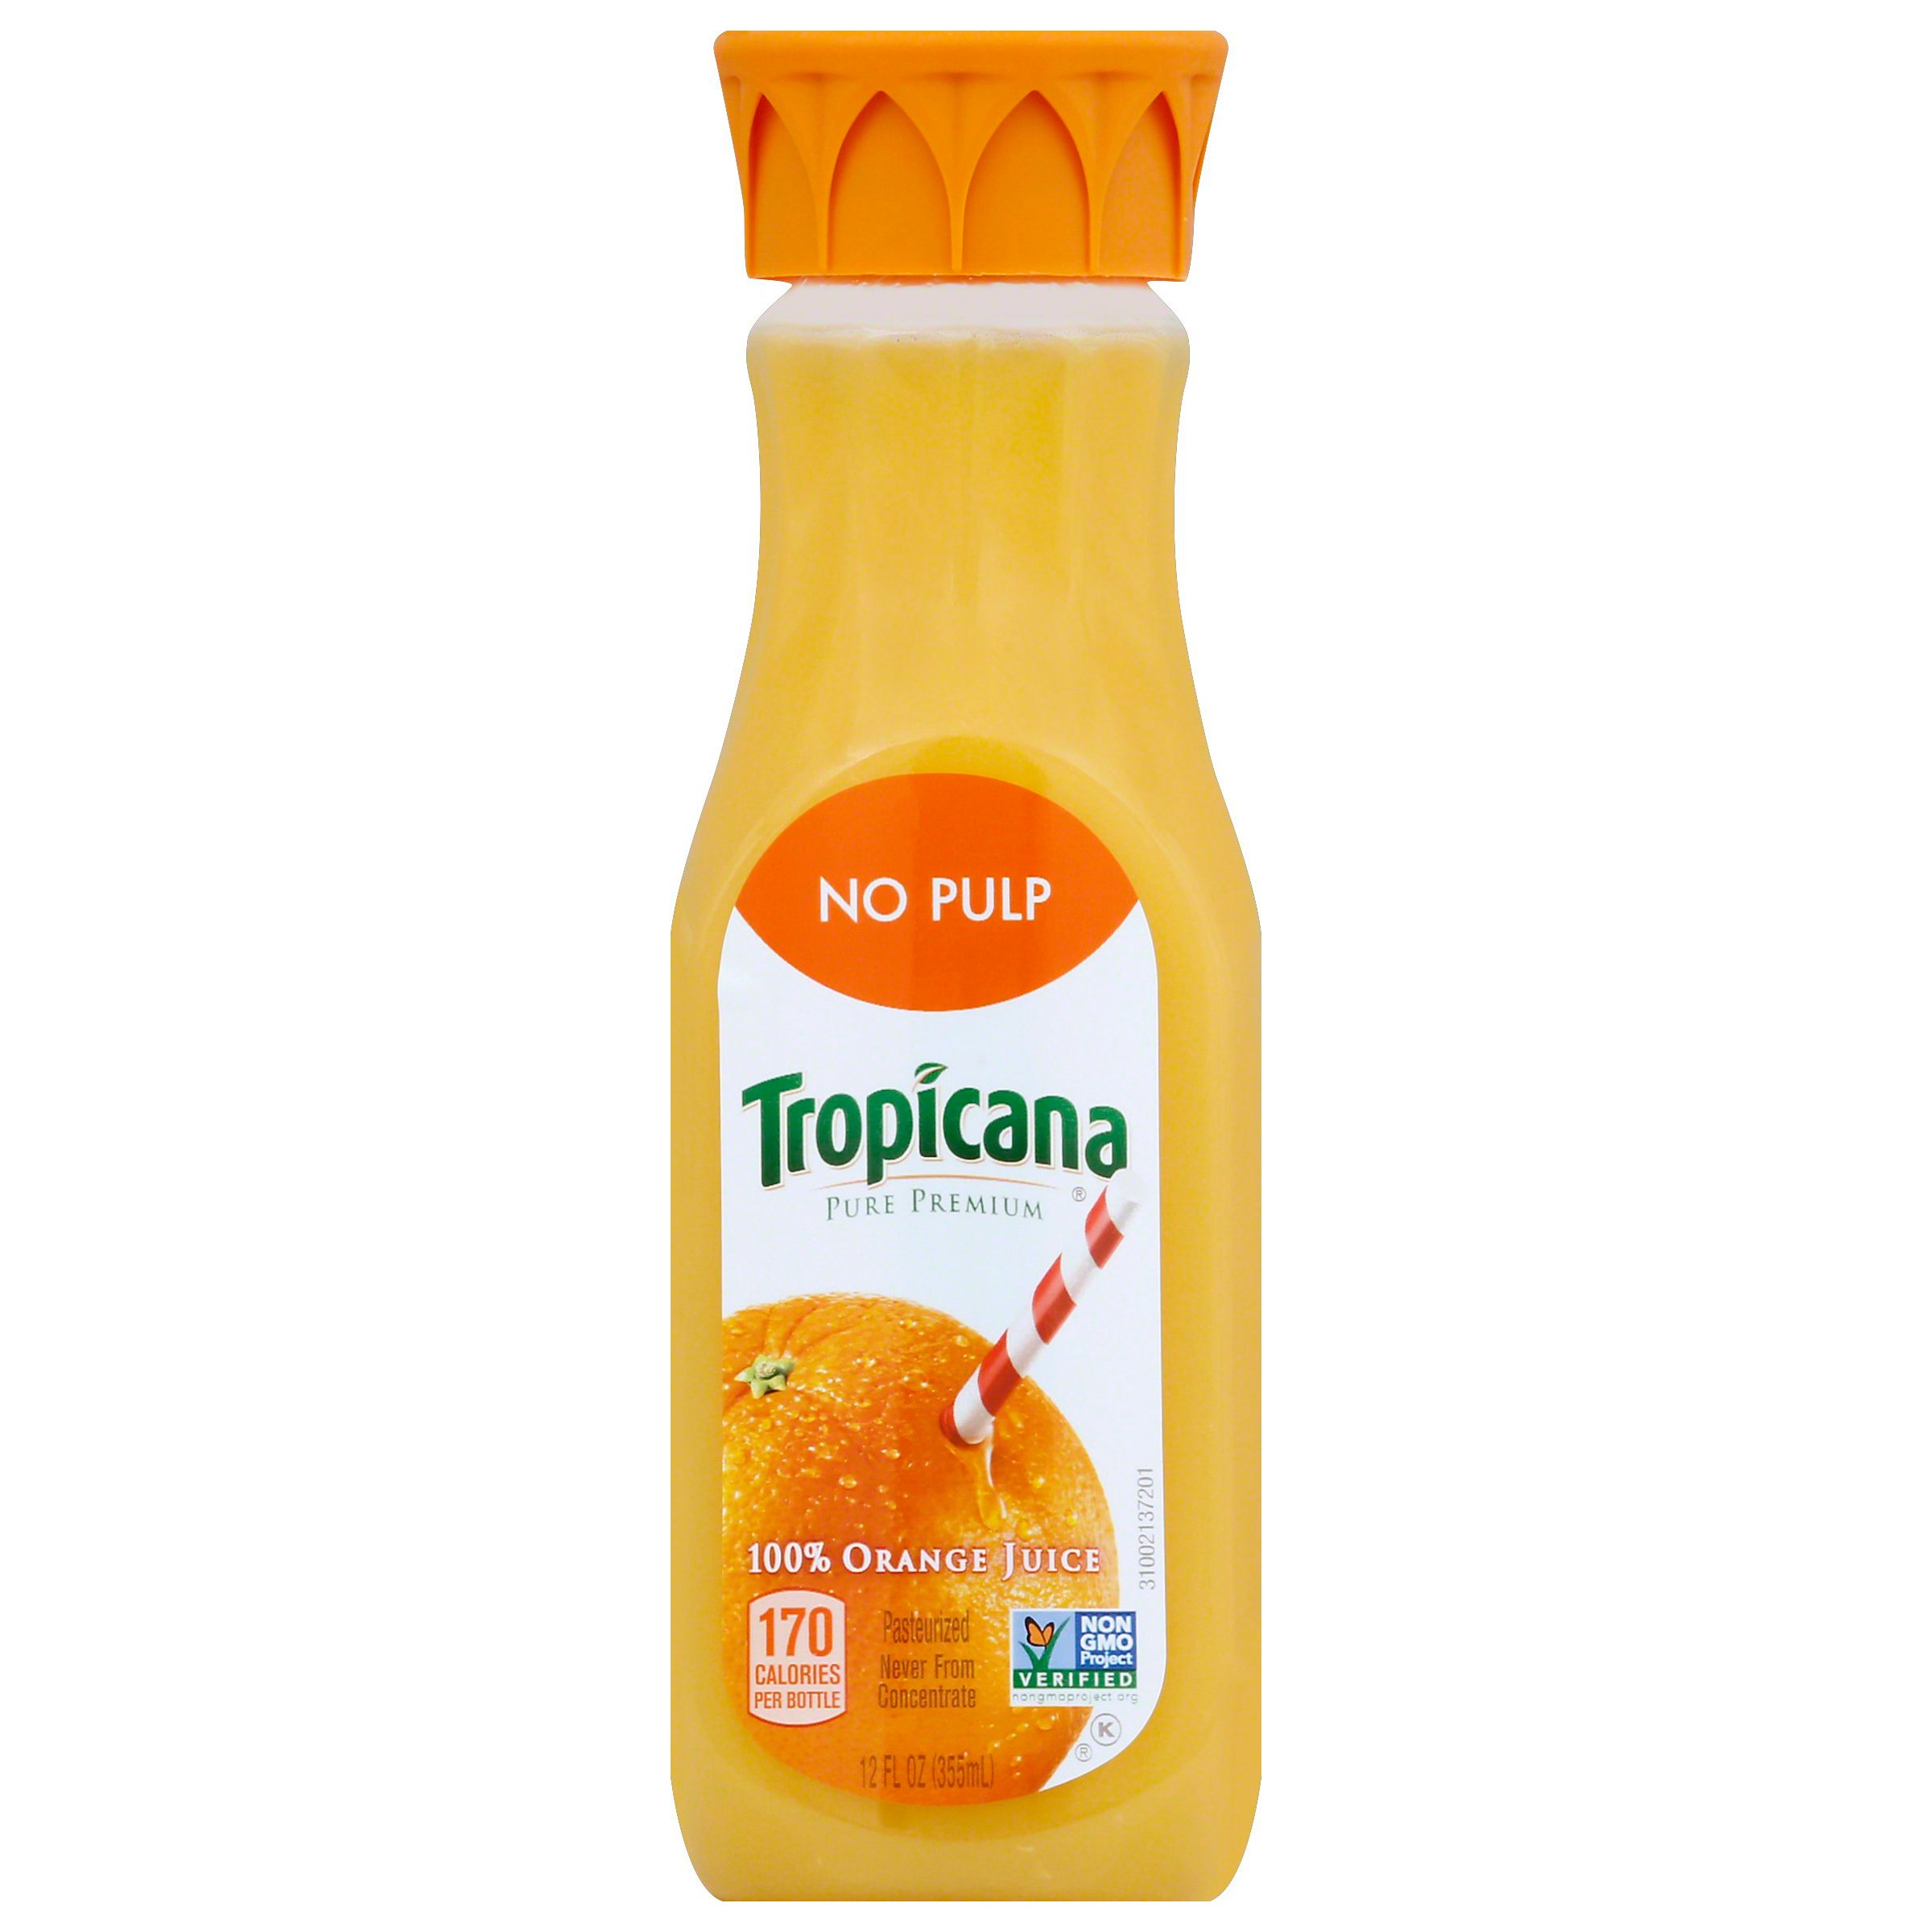 Tropicana Pure Premium No Pulp 100 Orange Juice Shop Juice At H E B